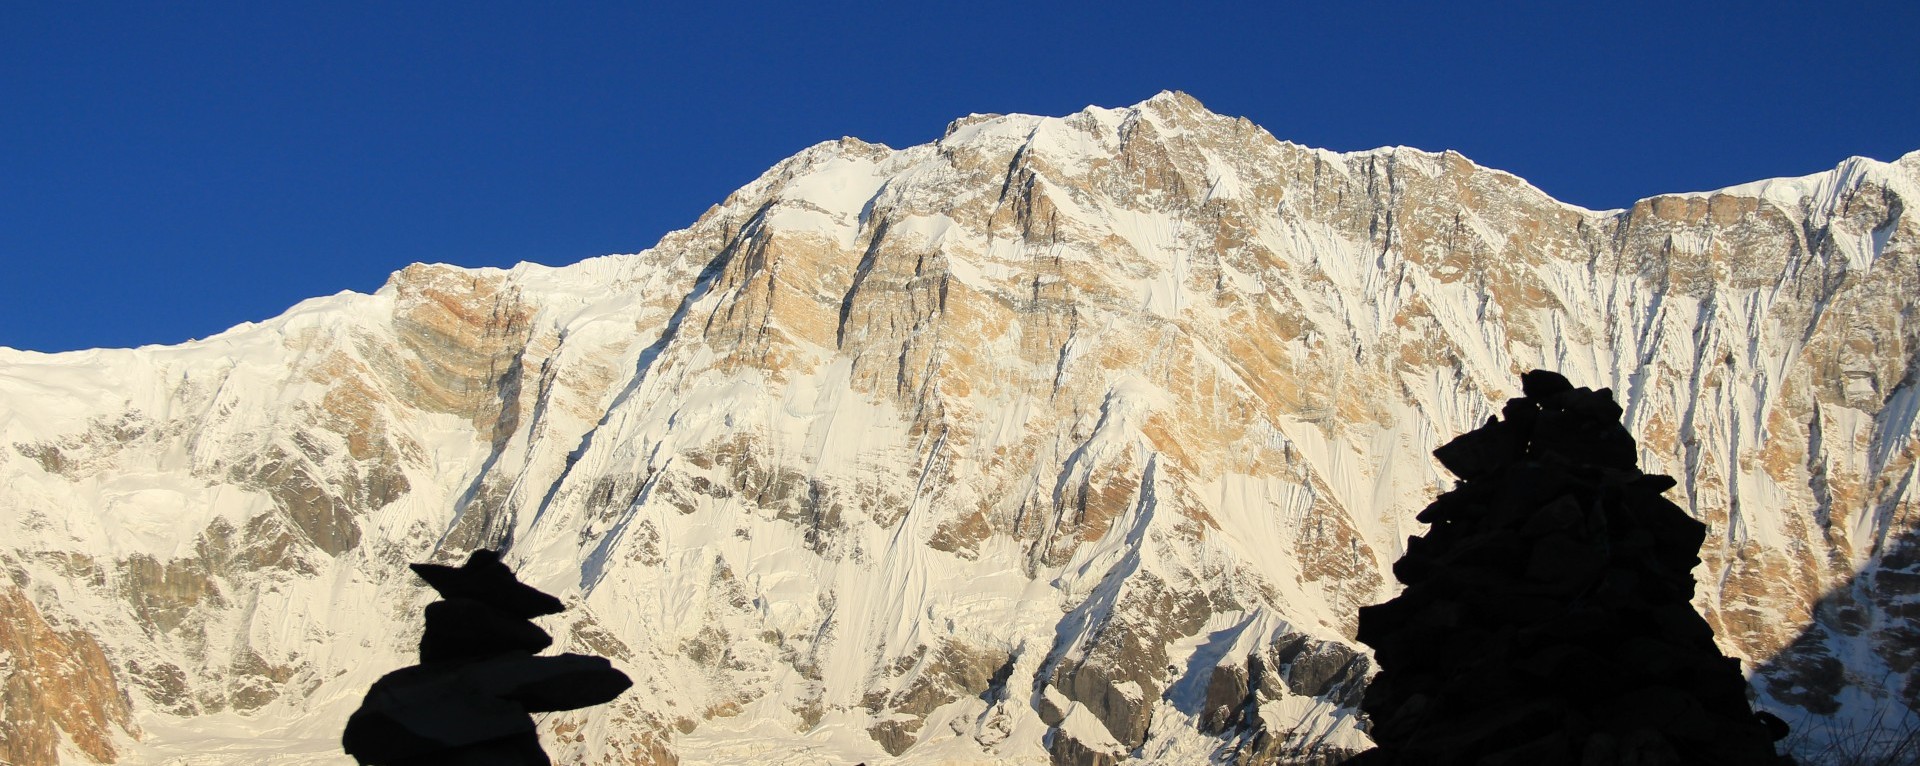 Mt.Annapurna IV Expedition